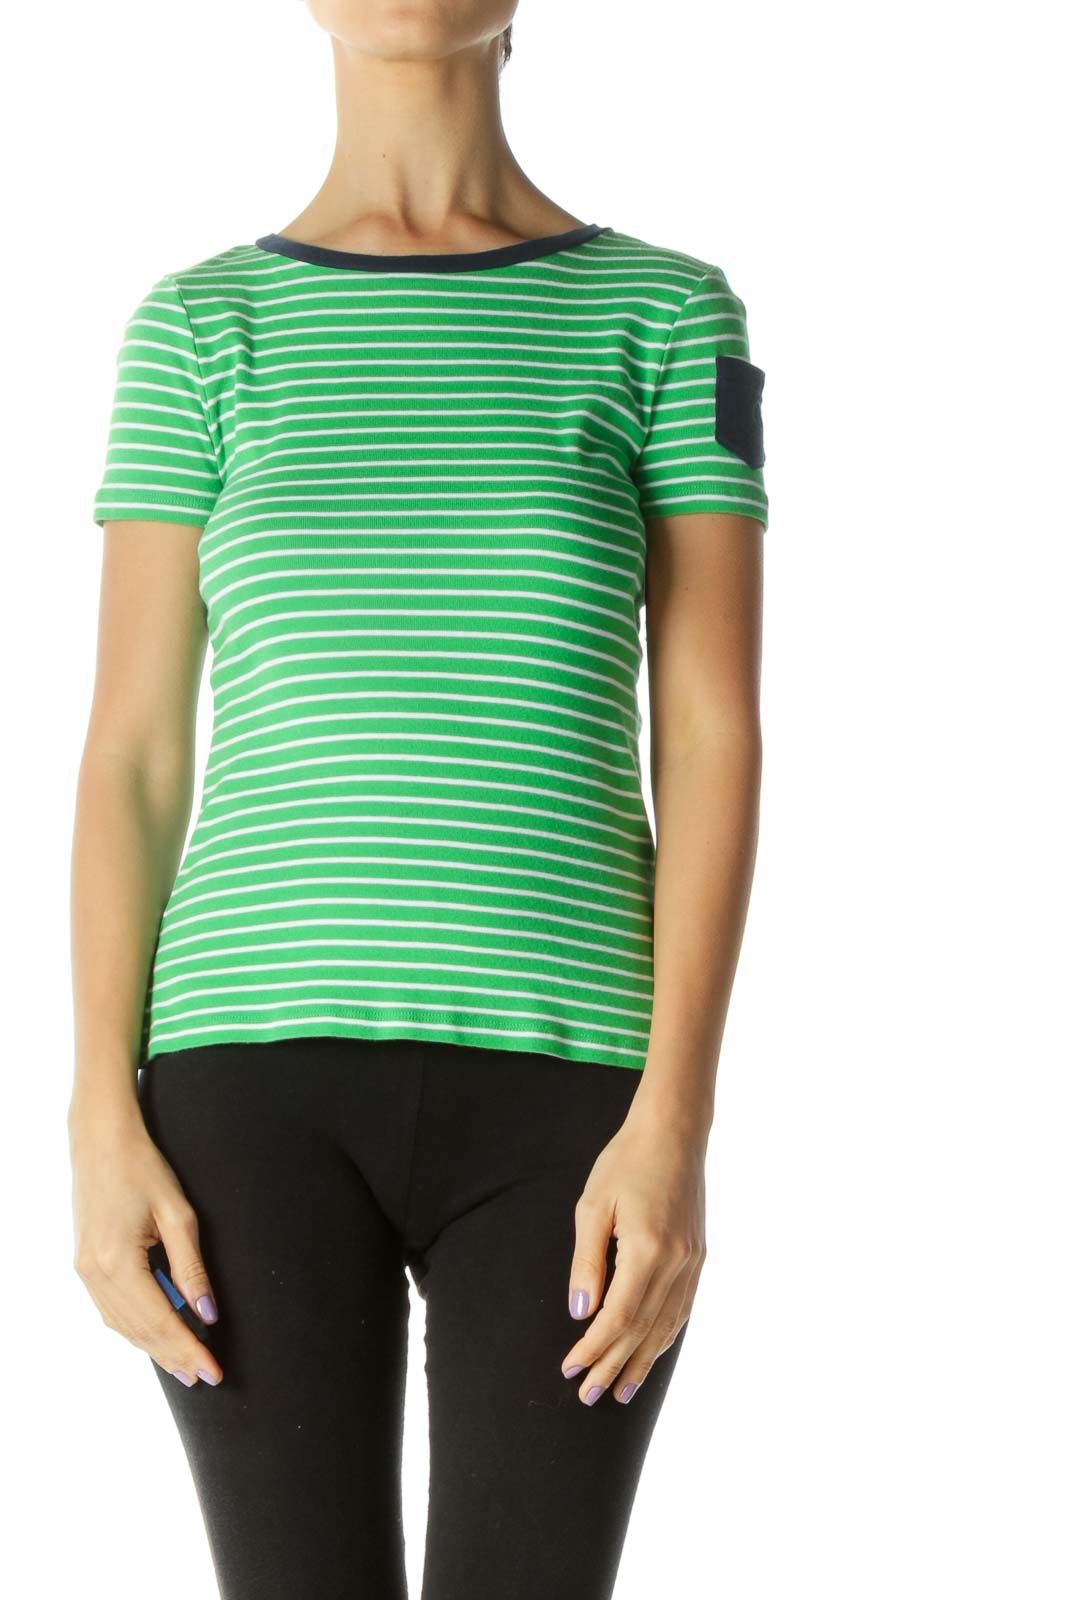 Green Blue White Striped Pocket T-Shirt Front